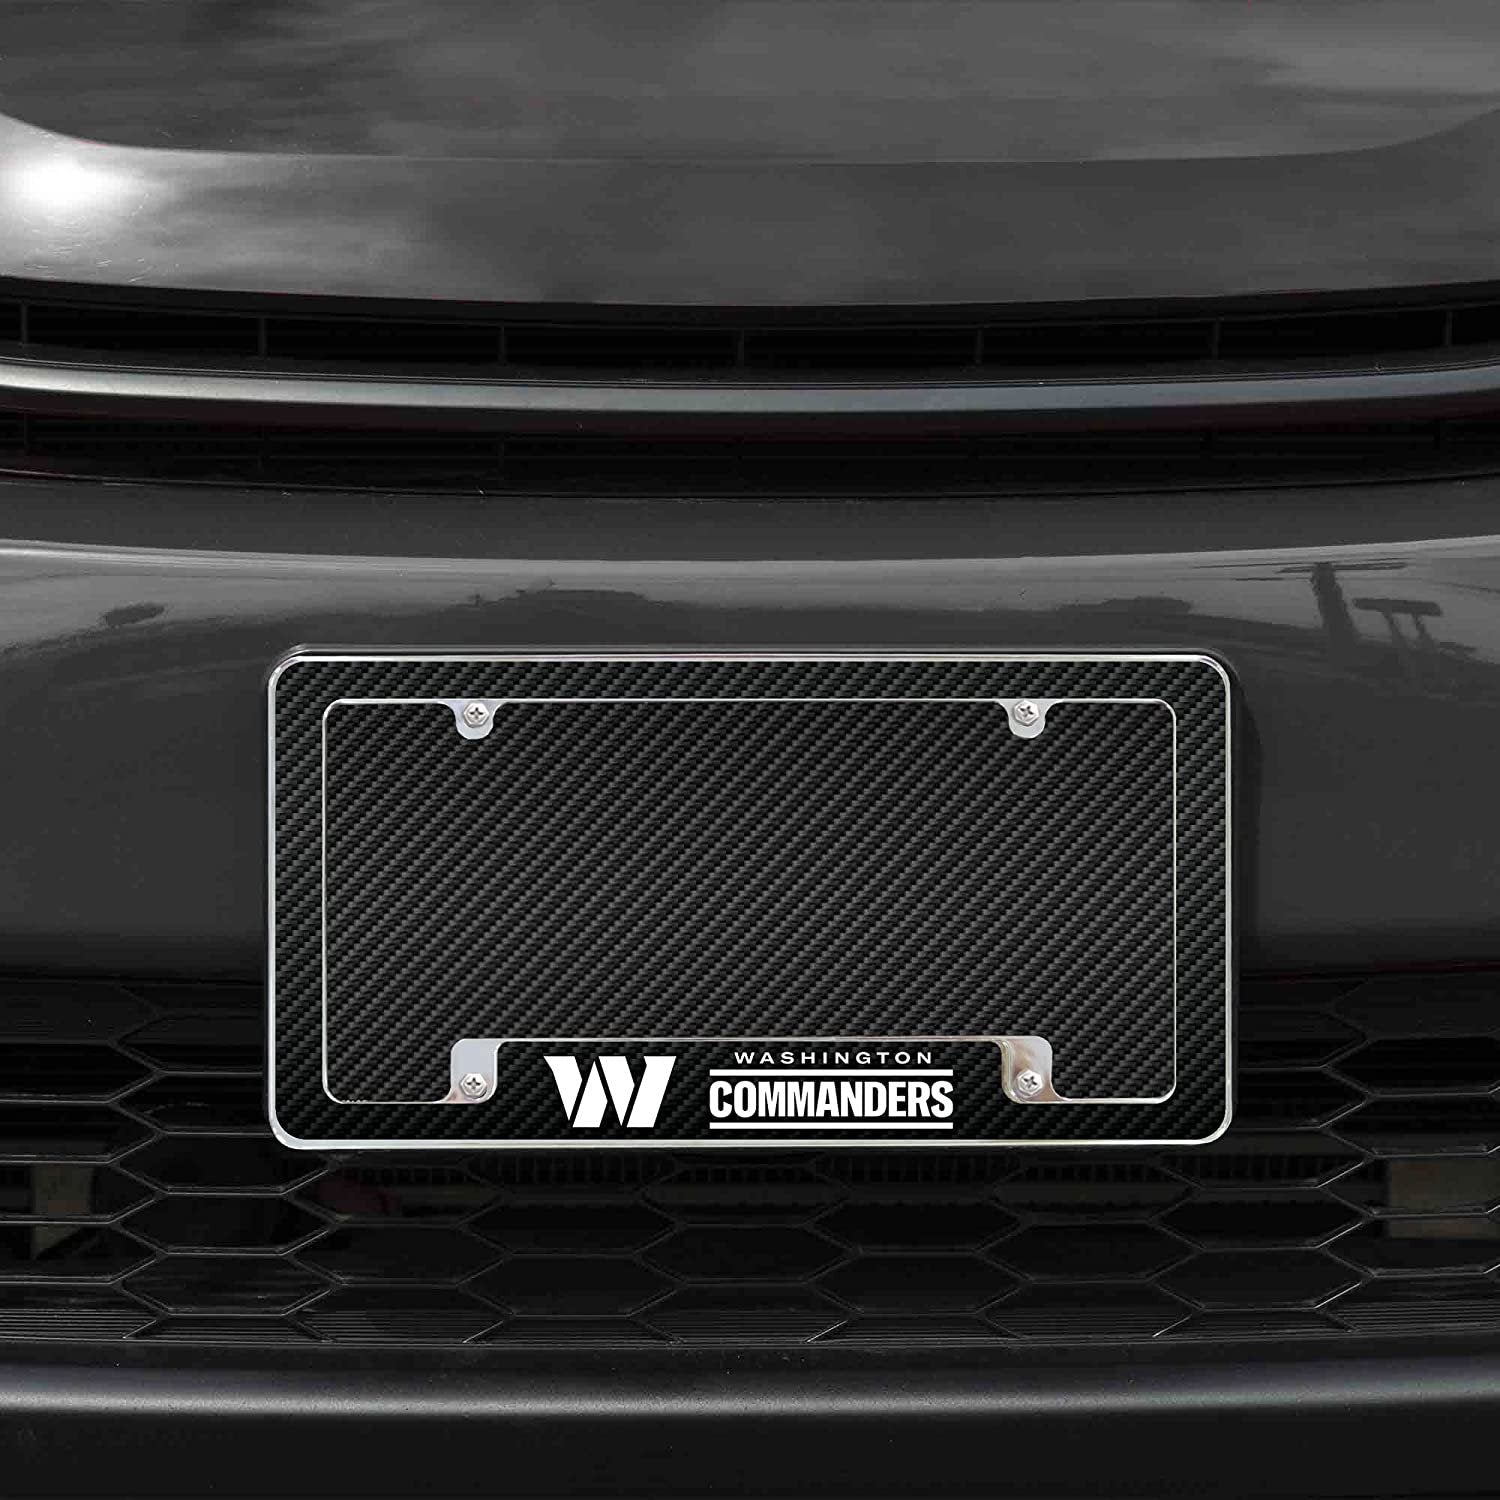 Washington Commanders Metal License Plate Frame Tag Cover Carbon Fiber Design 12x6 Inch